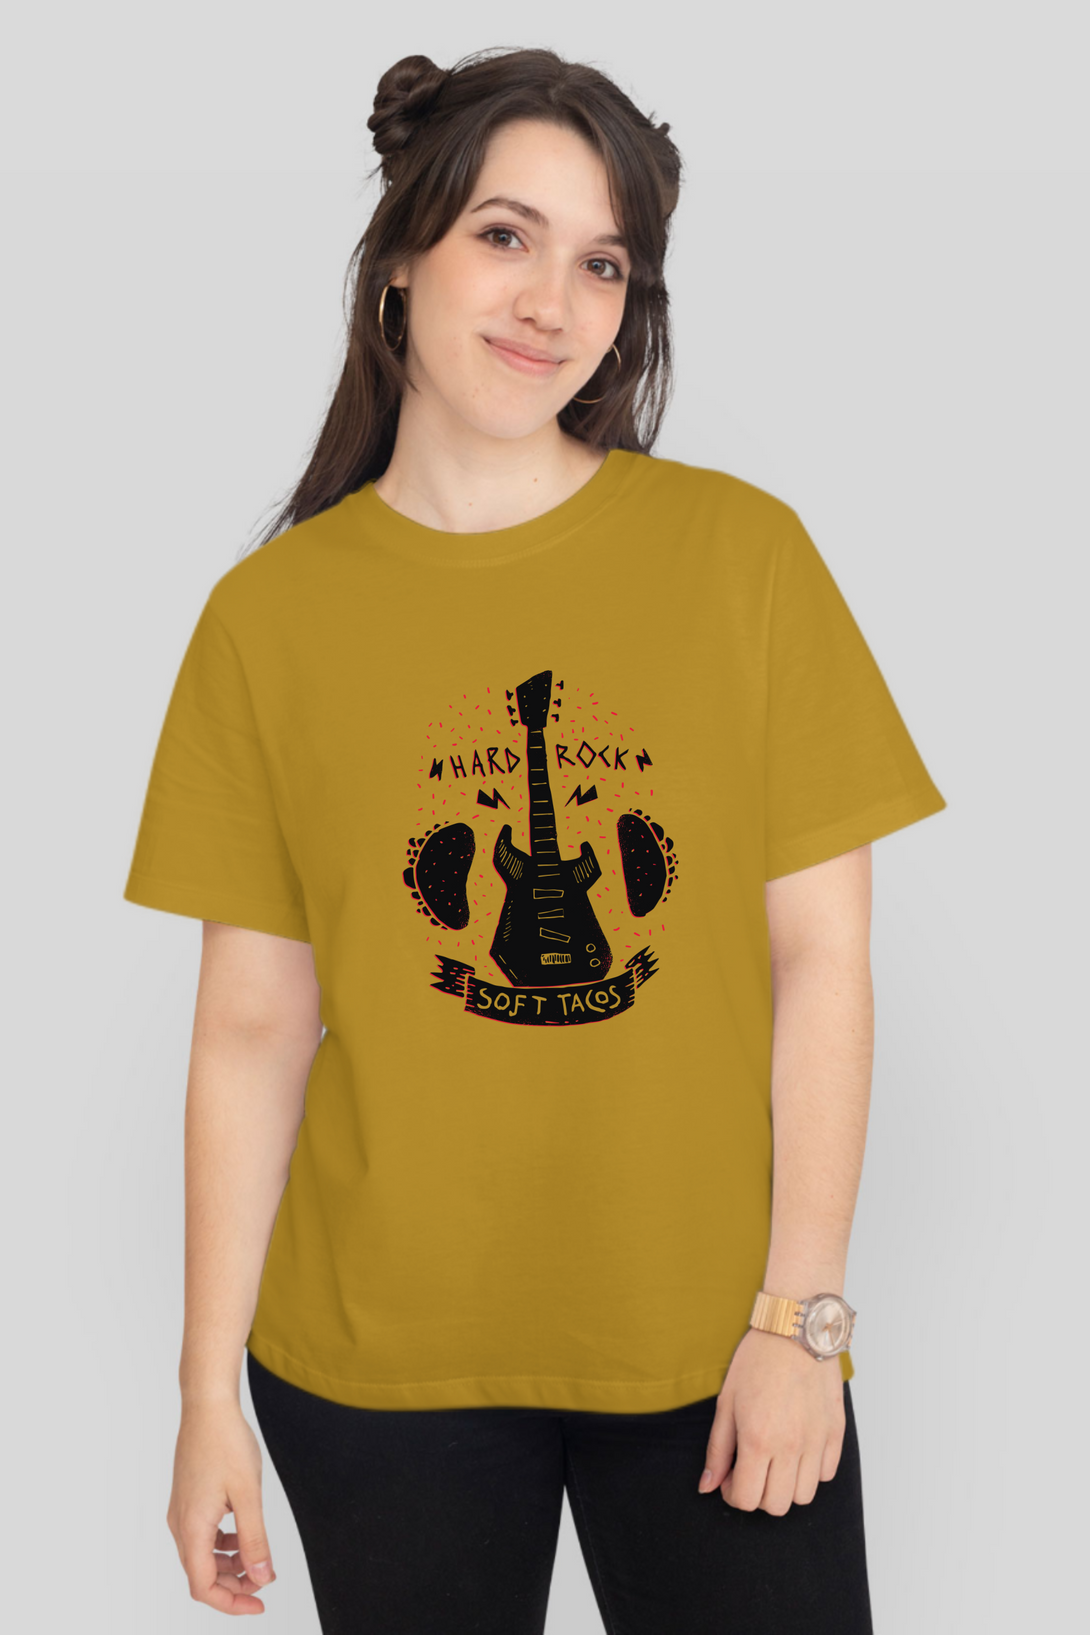 Hard Rock Printed T-Shirt For Women - WowWaves - 8